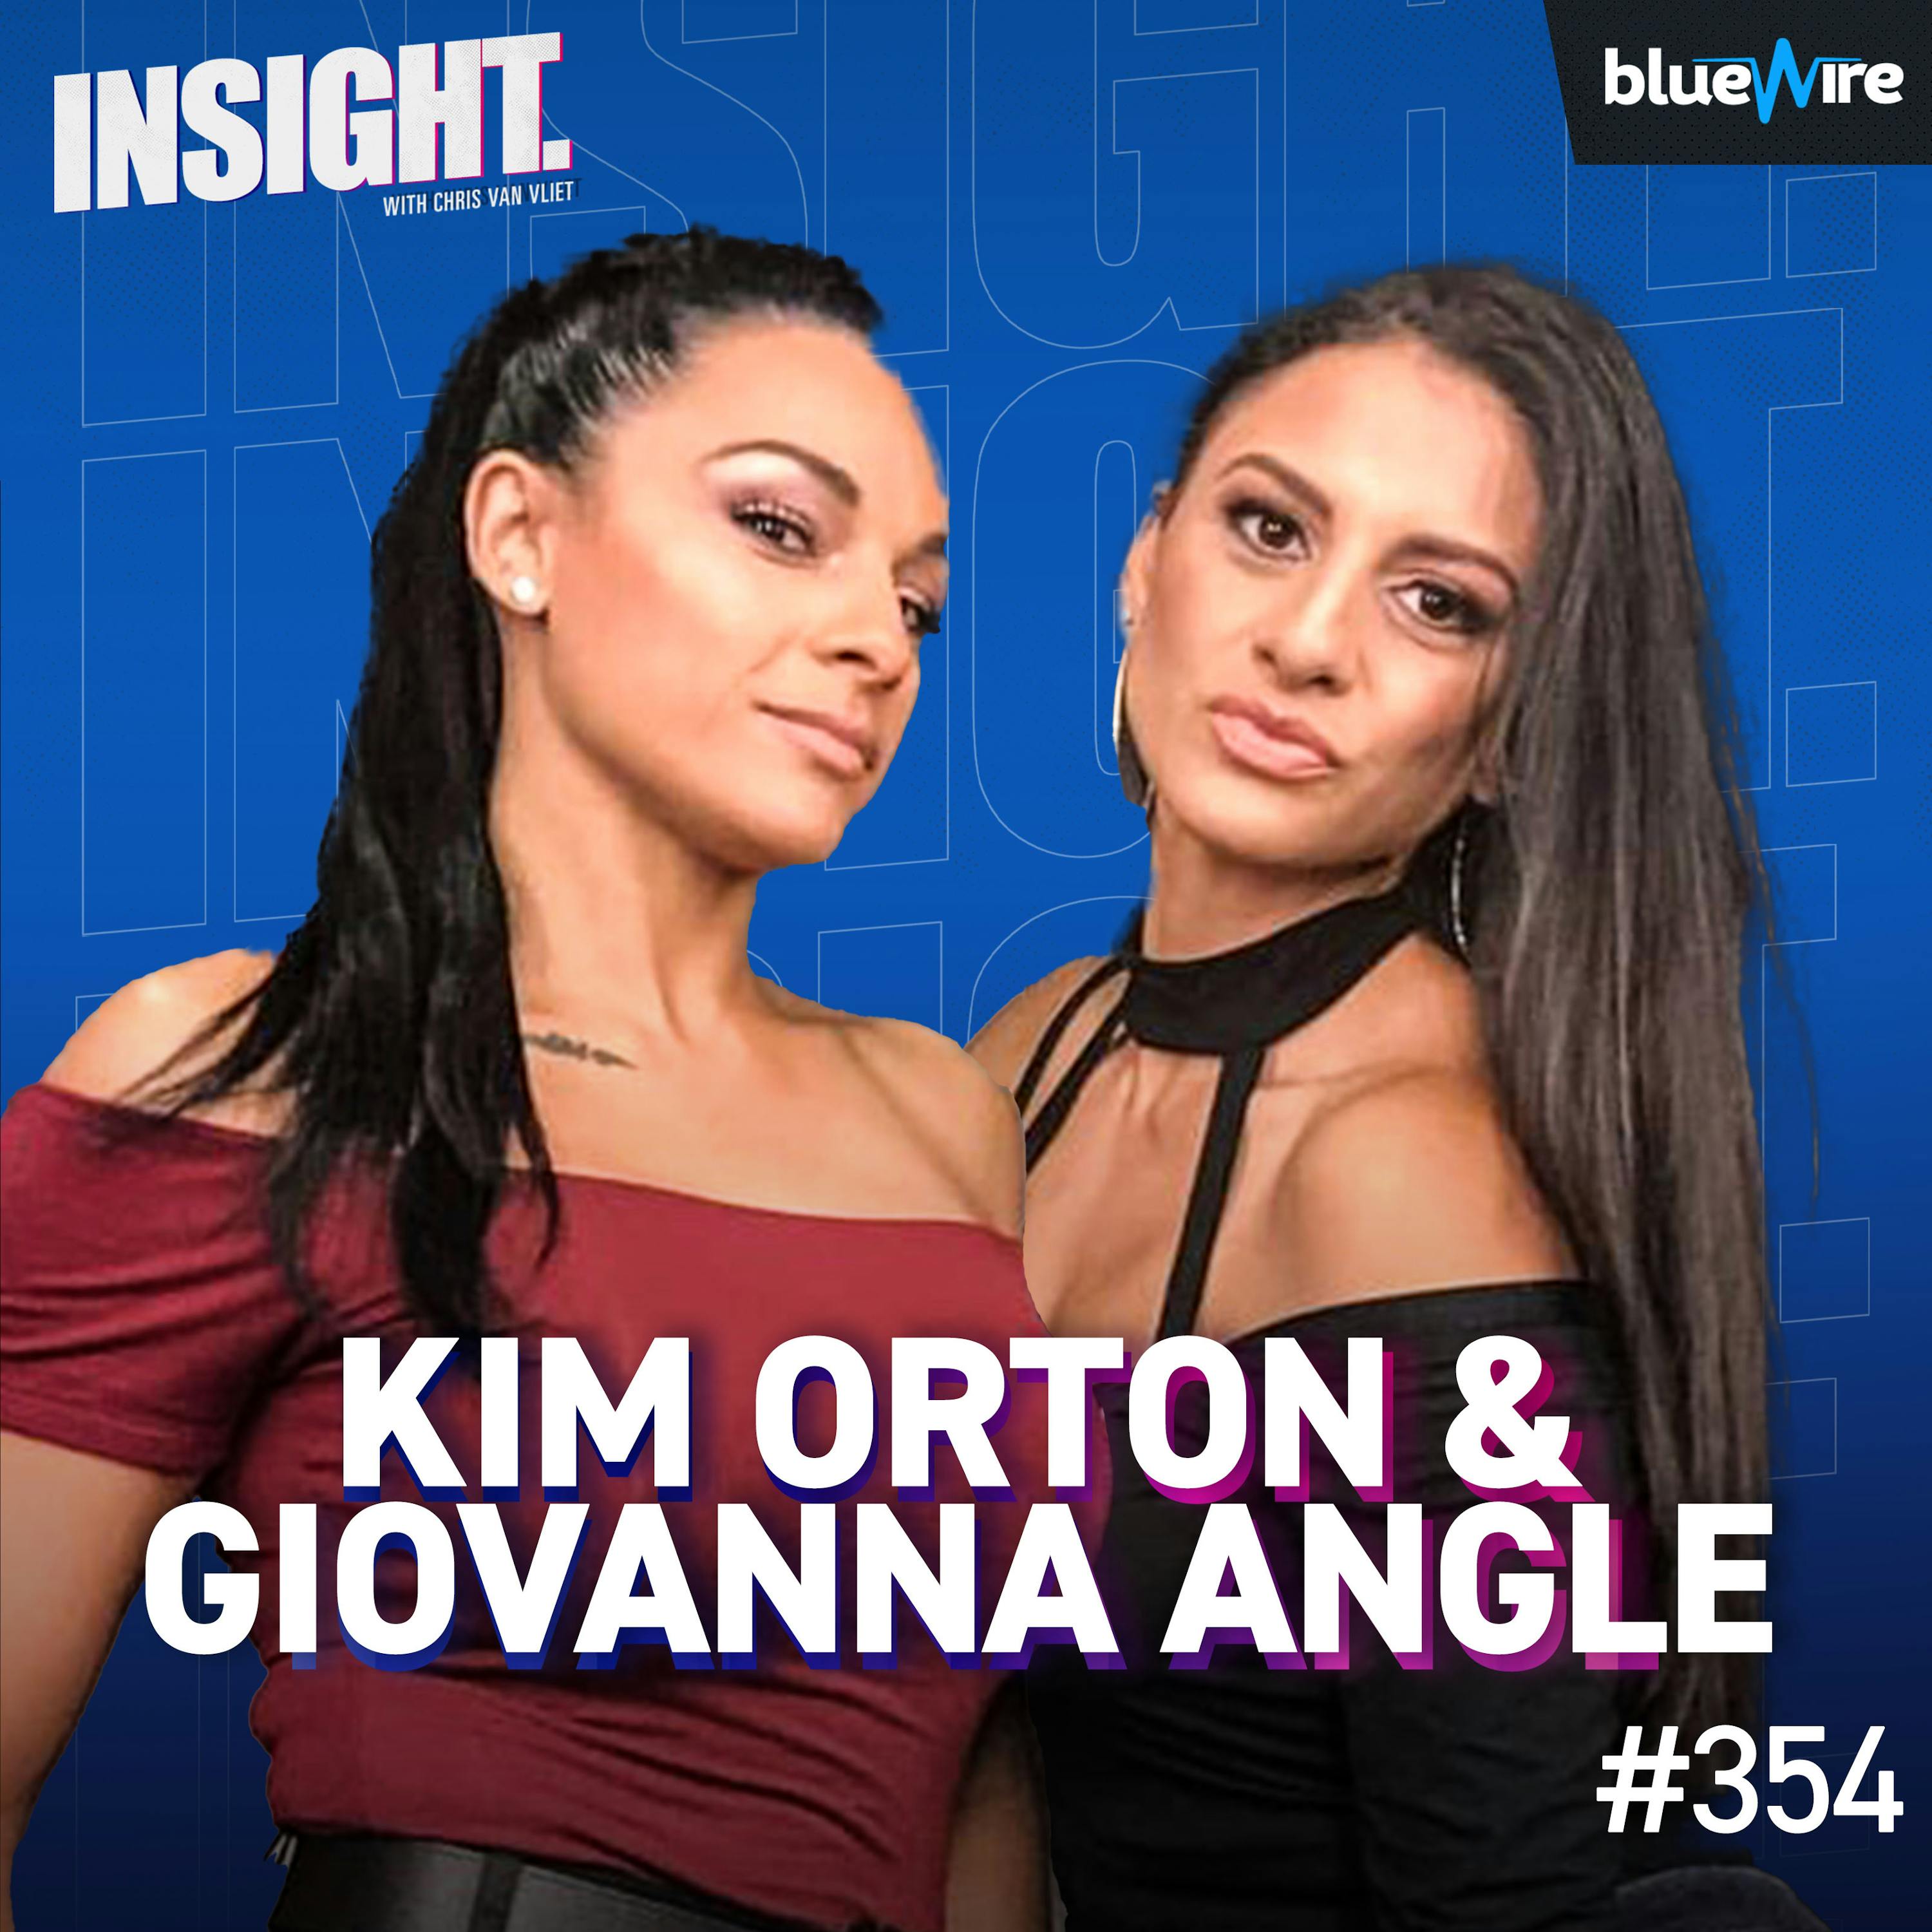 Randy Orton & Kurt Angle's Wives - Kim Orton and Giovanna Angle Tell All!